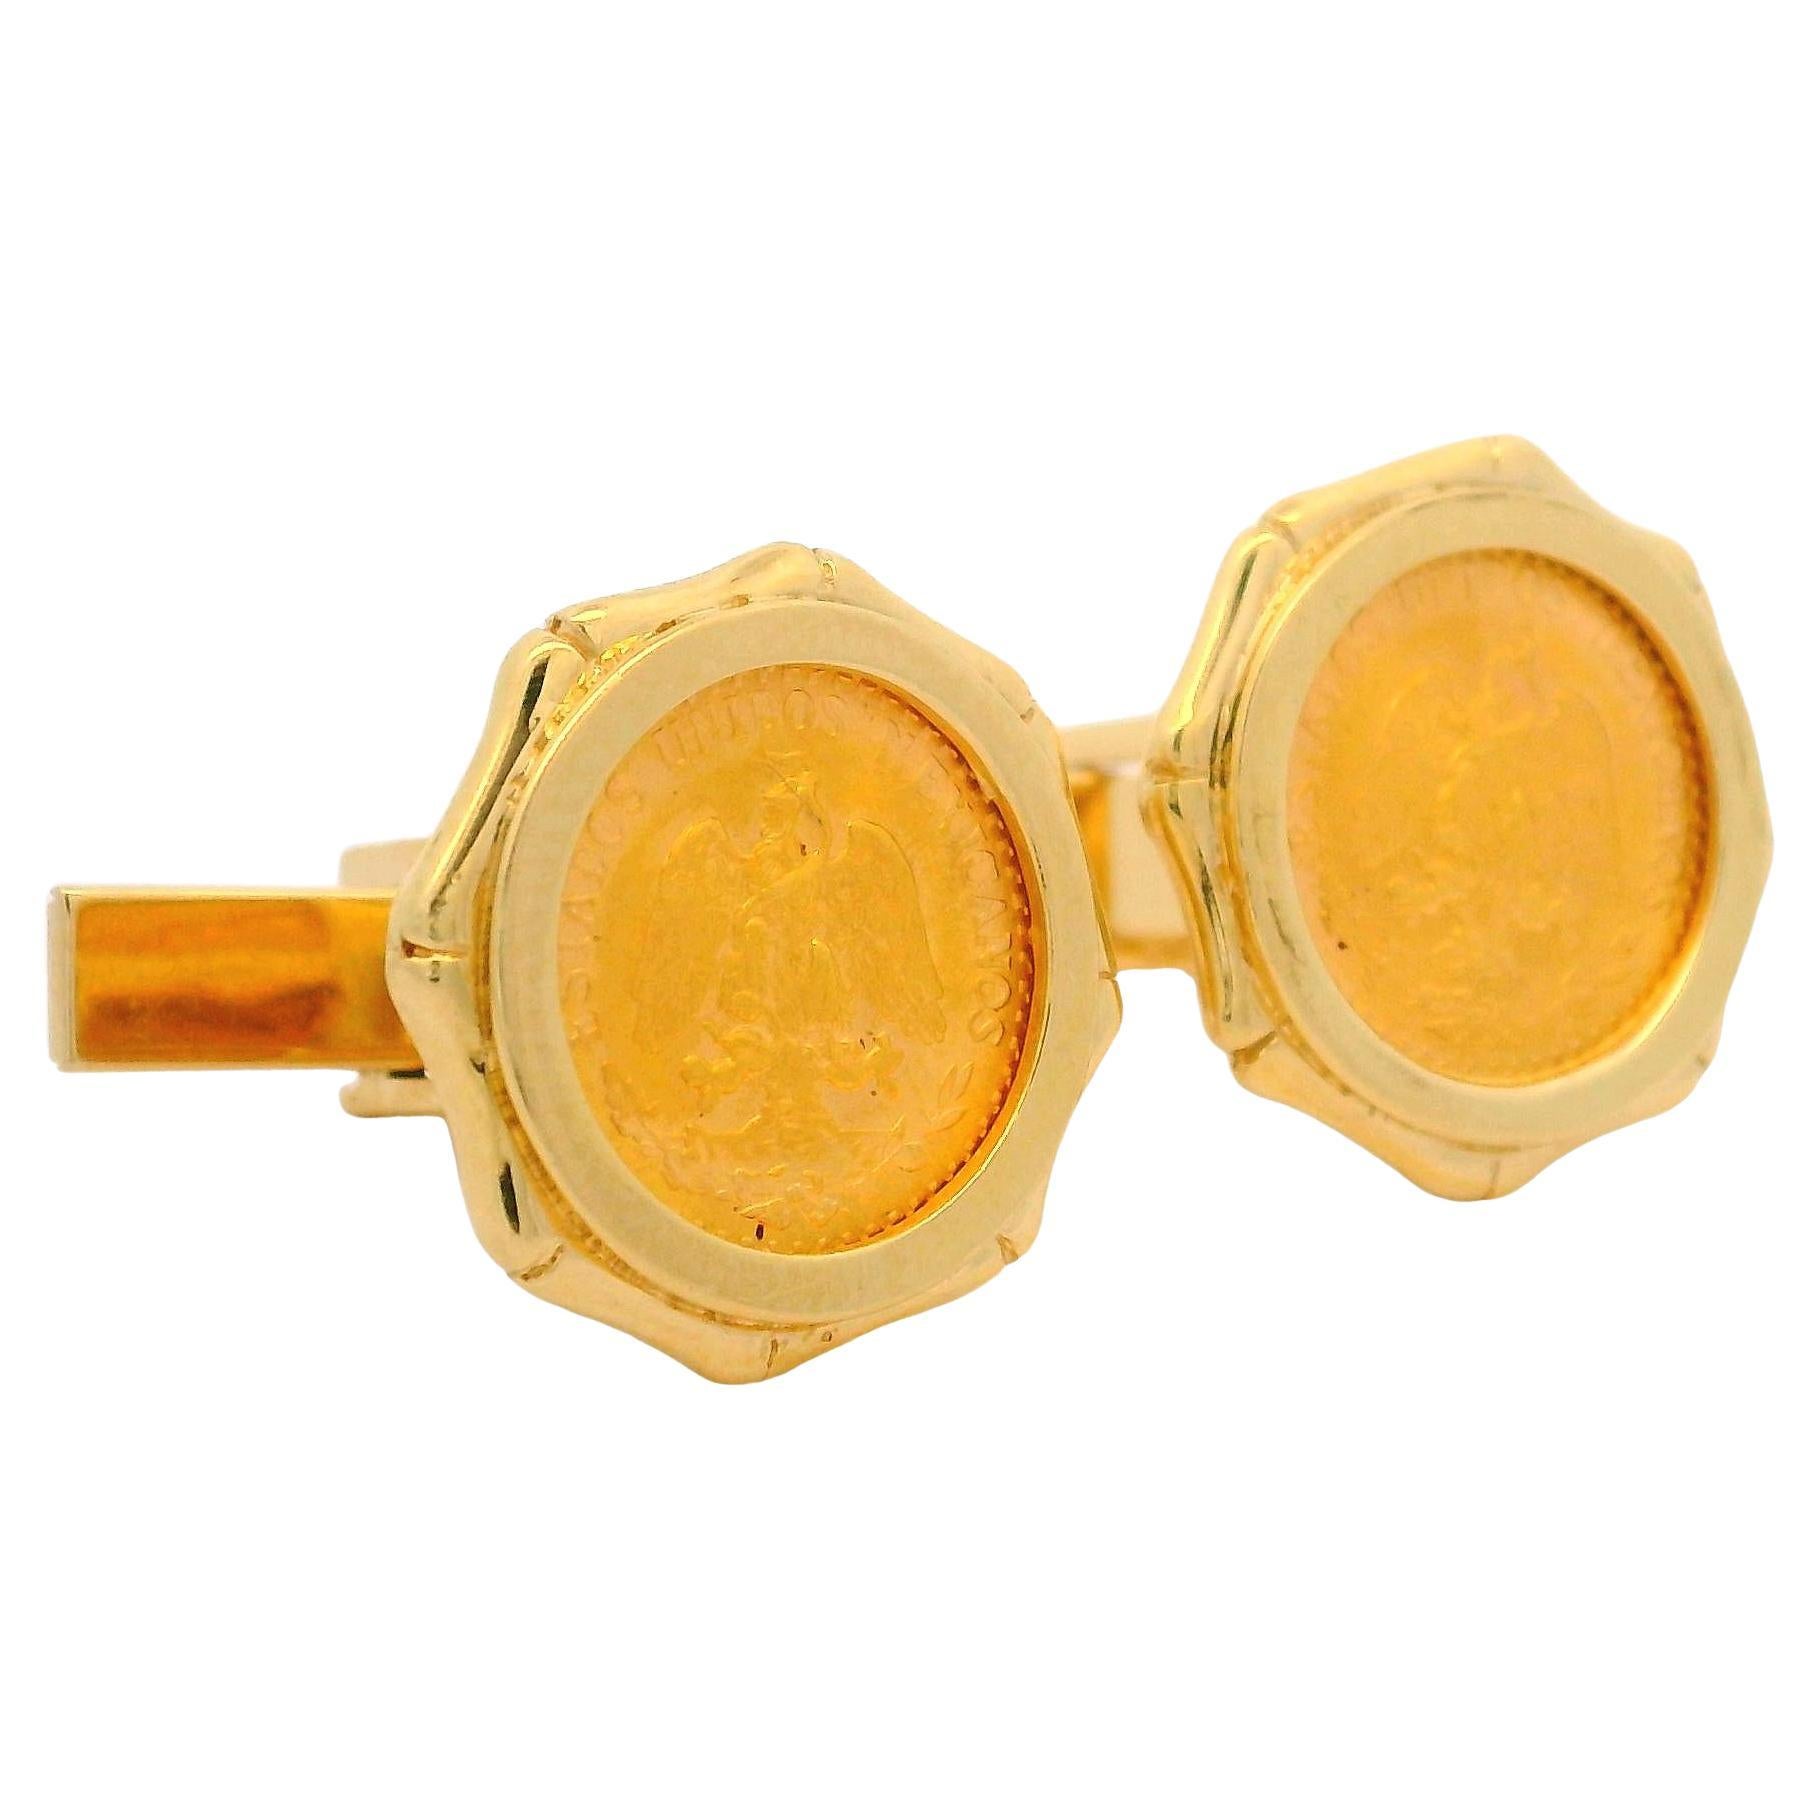 Vintage Collectable 20k Yellow Gold Estados Unidos Mexcanos Dos Pesos Cufflinks For Sale